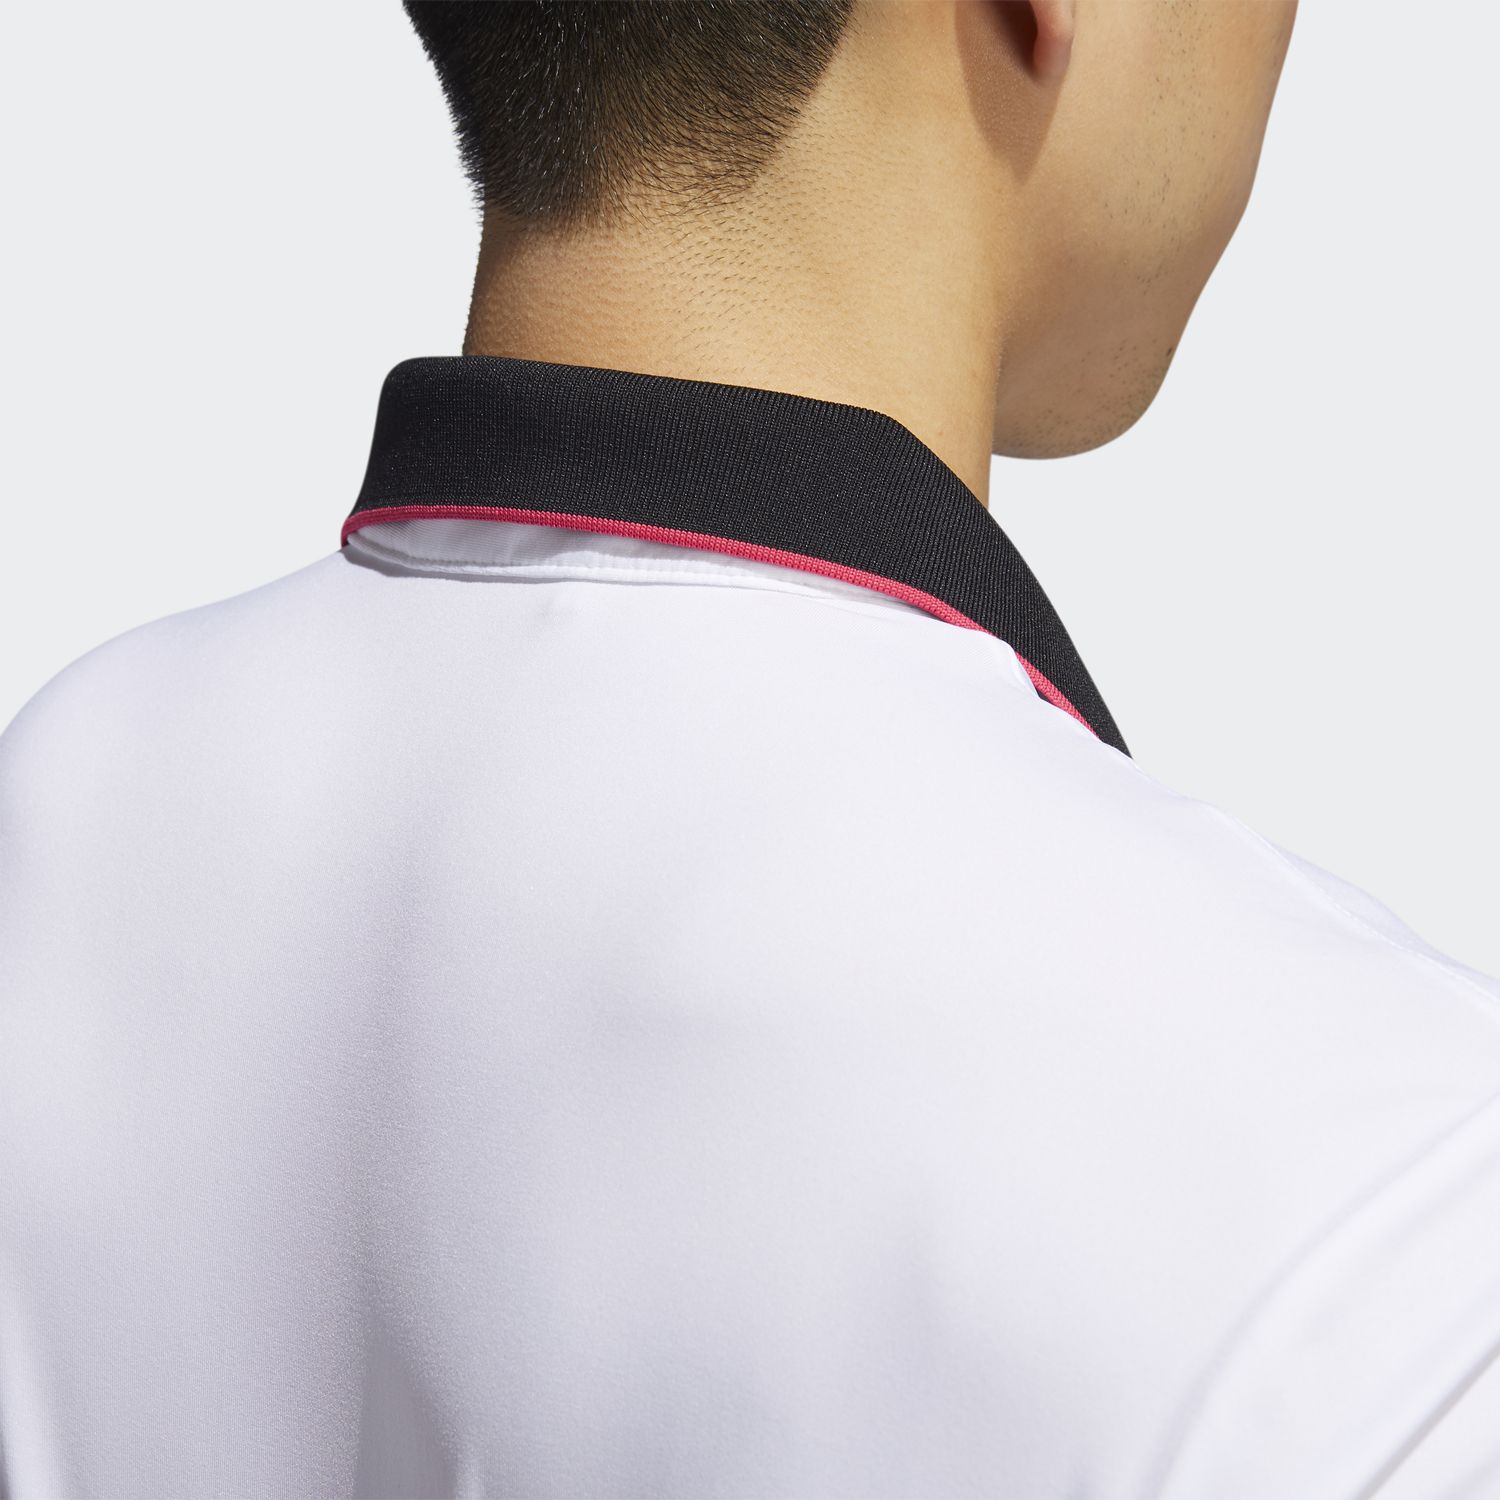 Adidas Ultimate365 3-Stripes Polo Shirt - Men